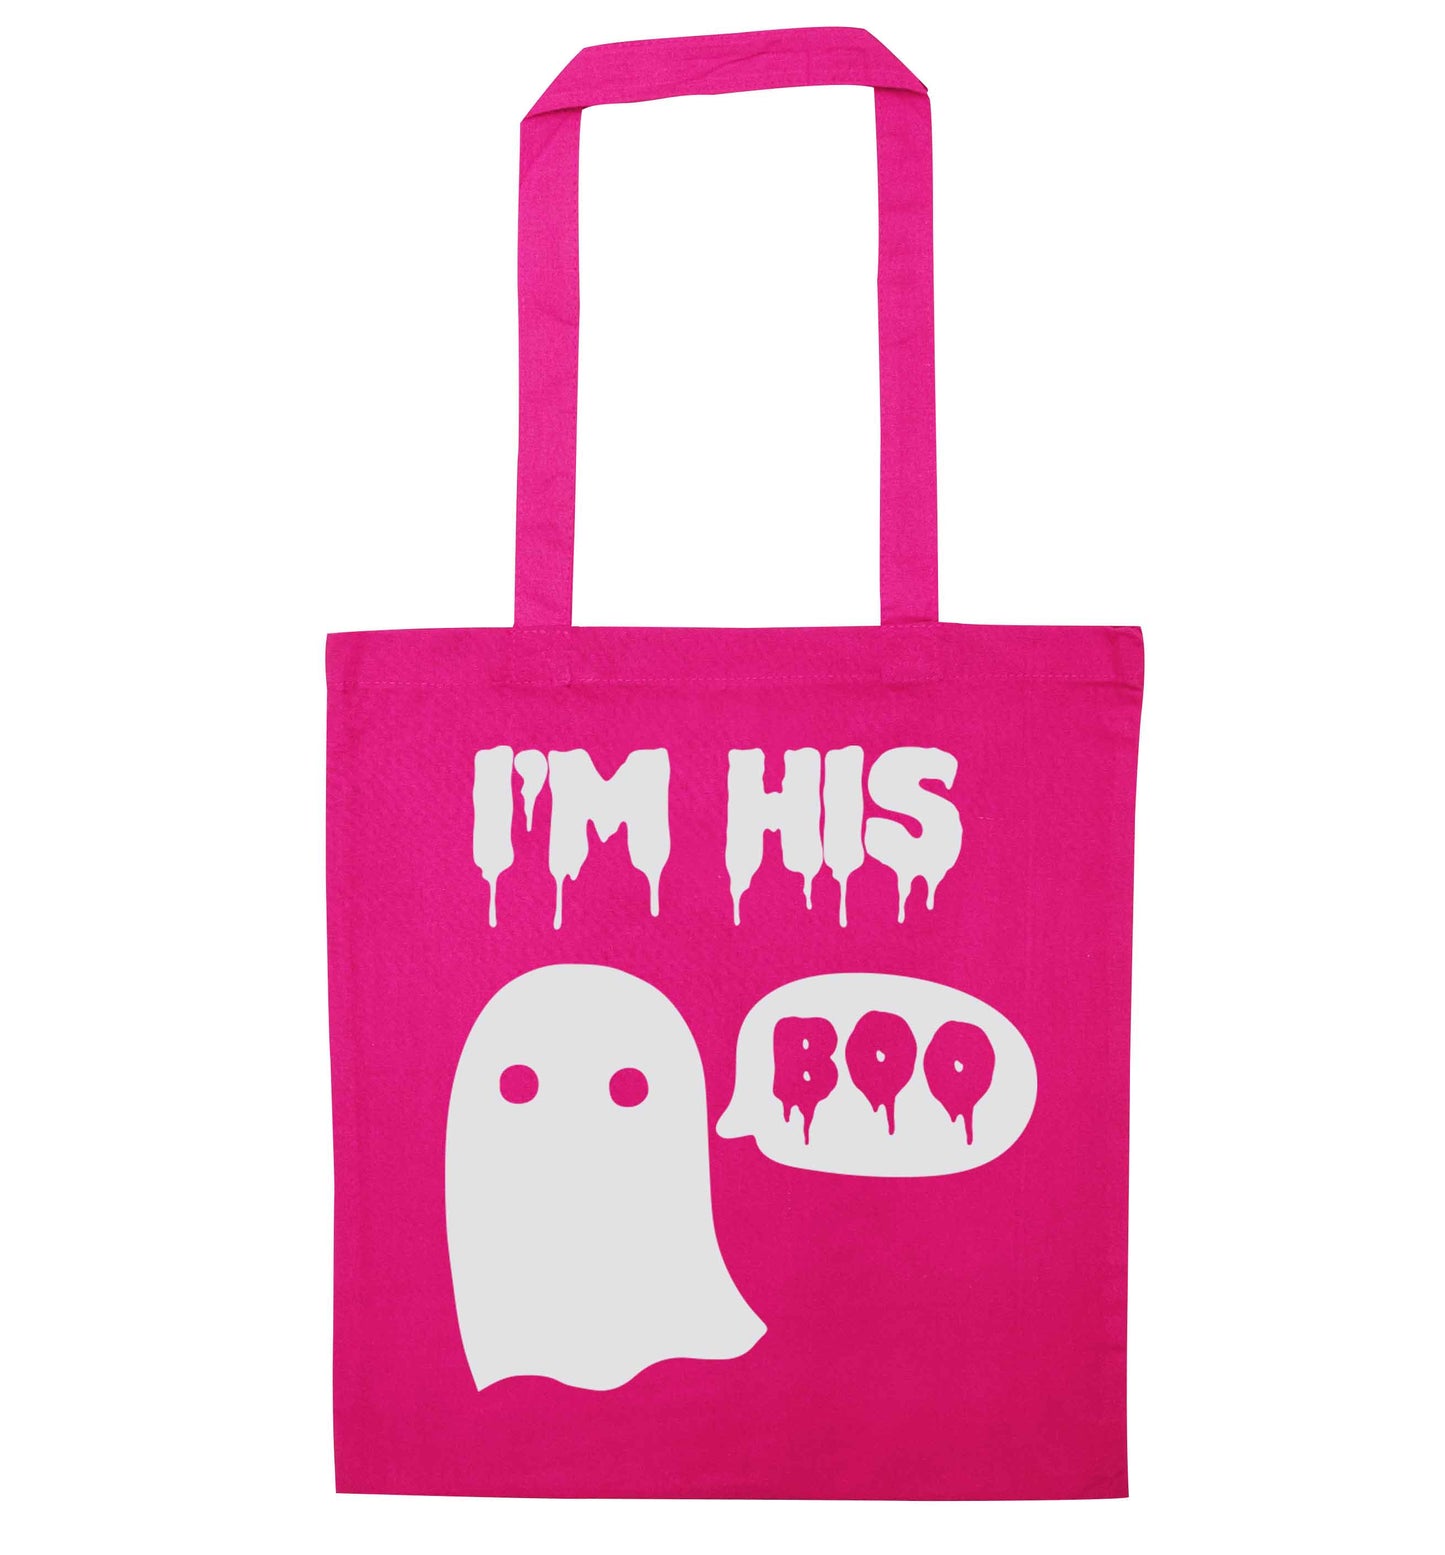 I'm his boo pink tote bag